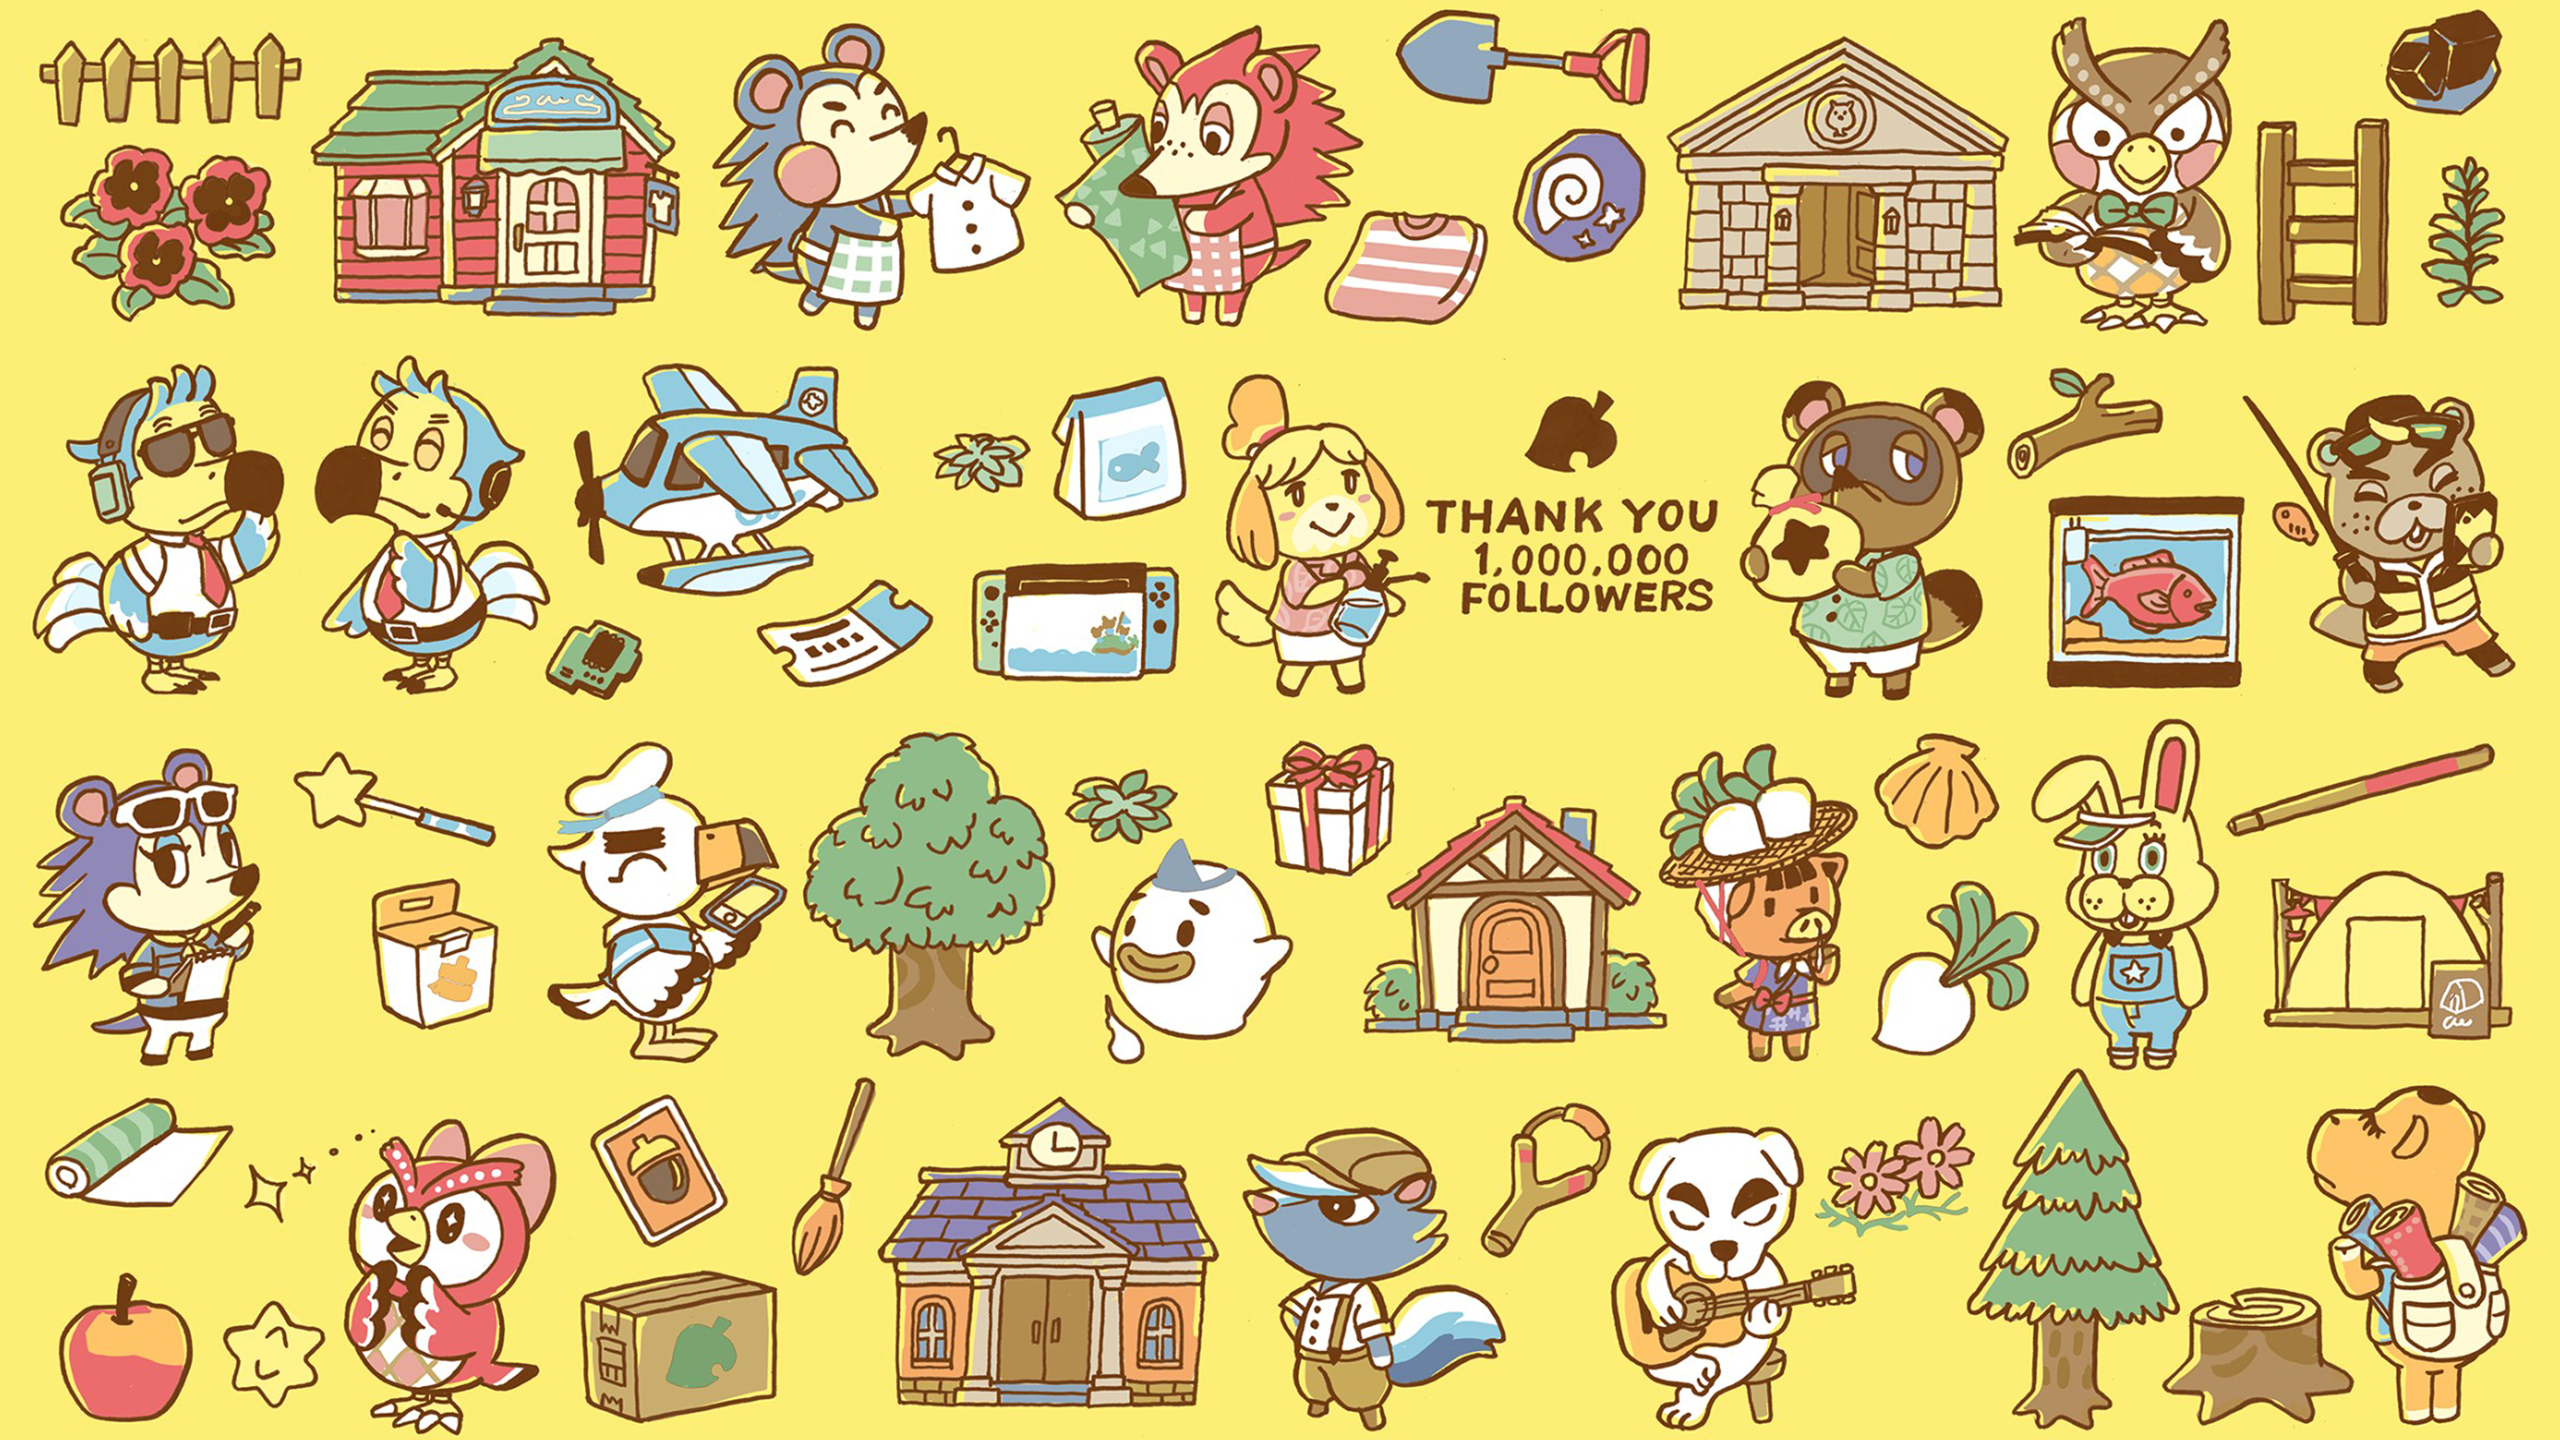 Animal Crossing HD Wallpapers  PixelsTalkNet